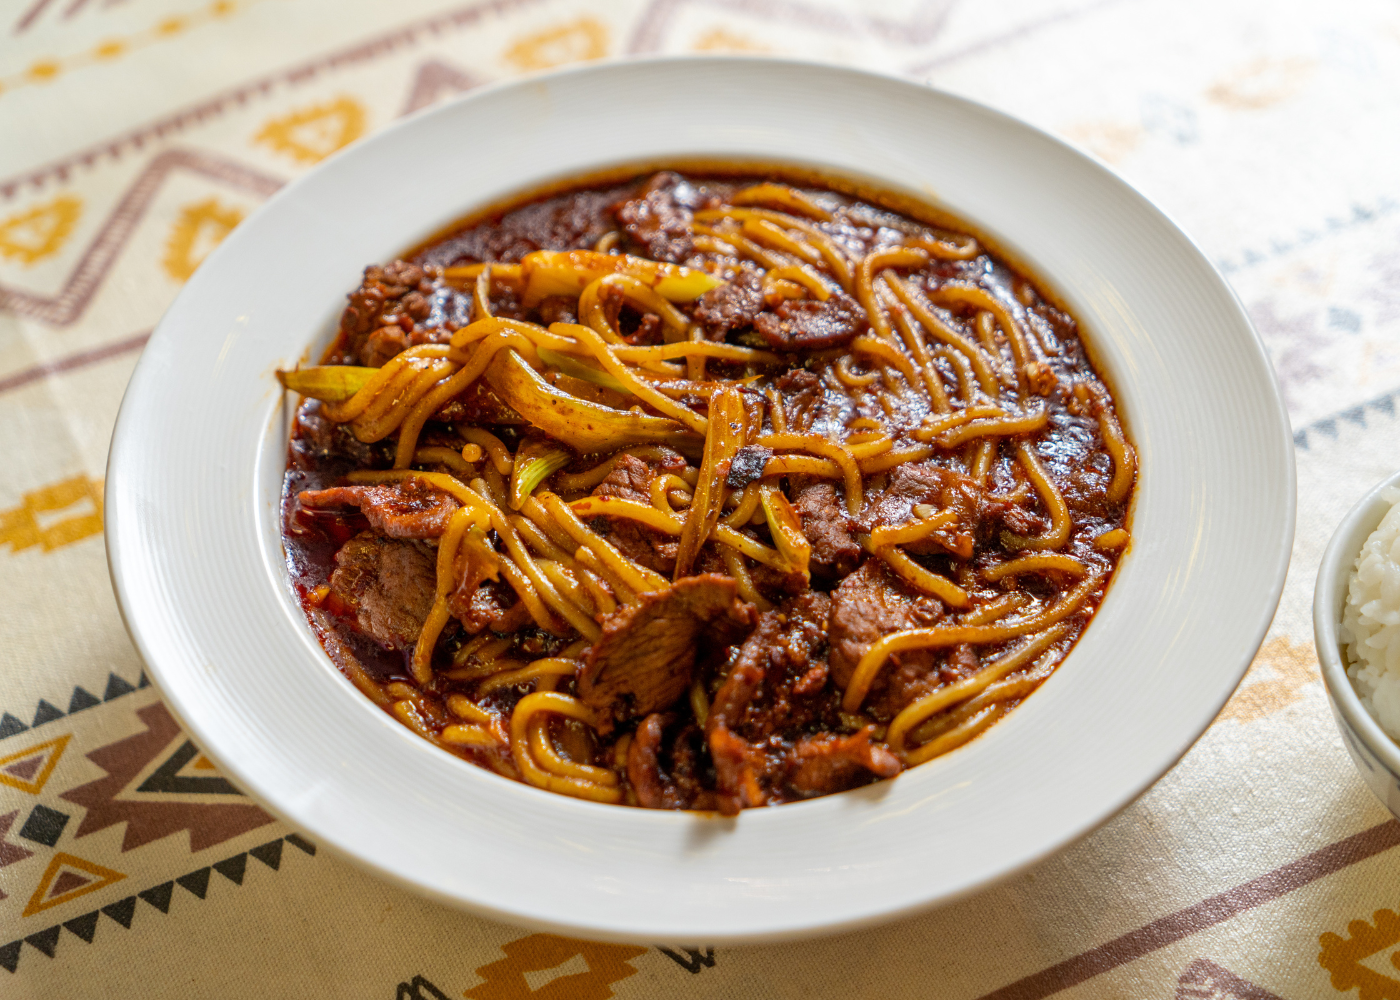 Halal street Hot Pot & Xinjiang Cuisine 新疆菜 良湯火鍋 - Newark